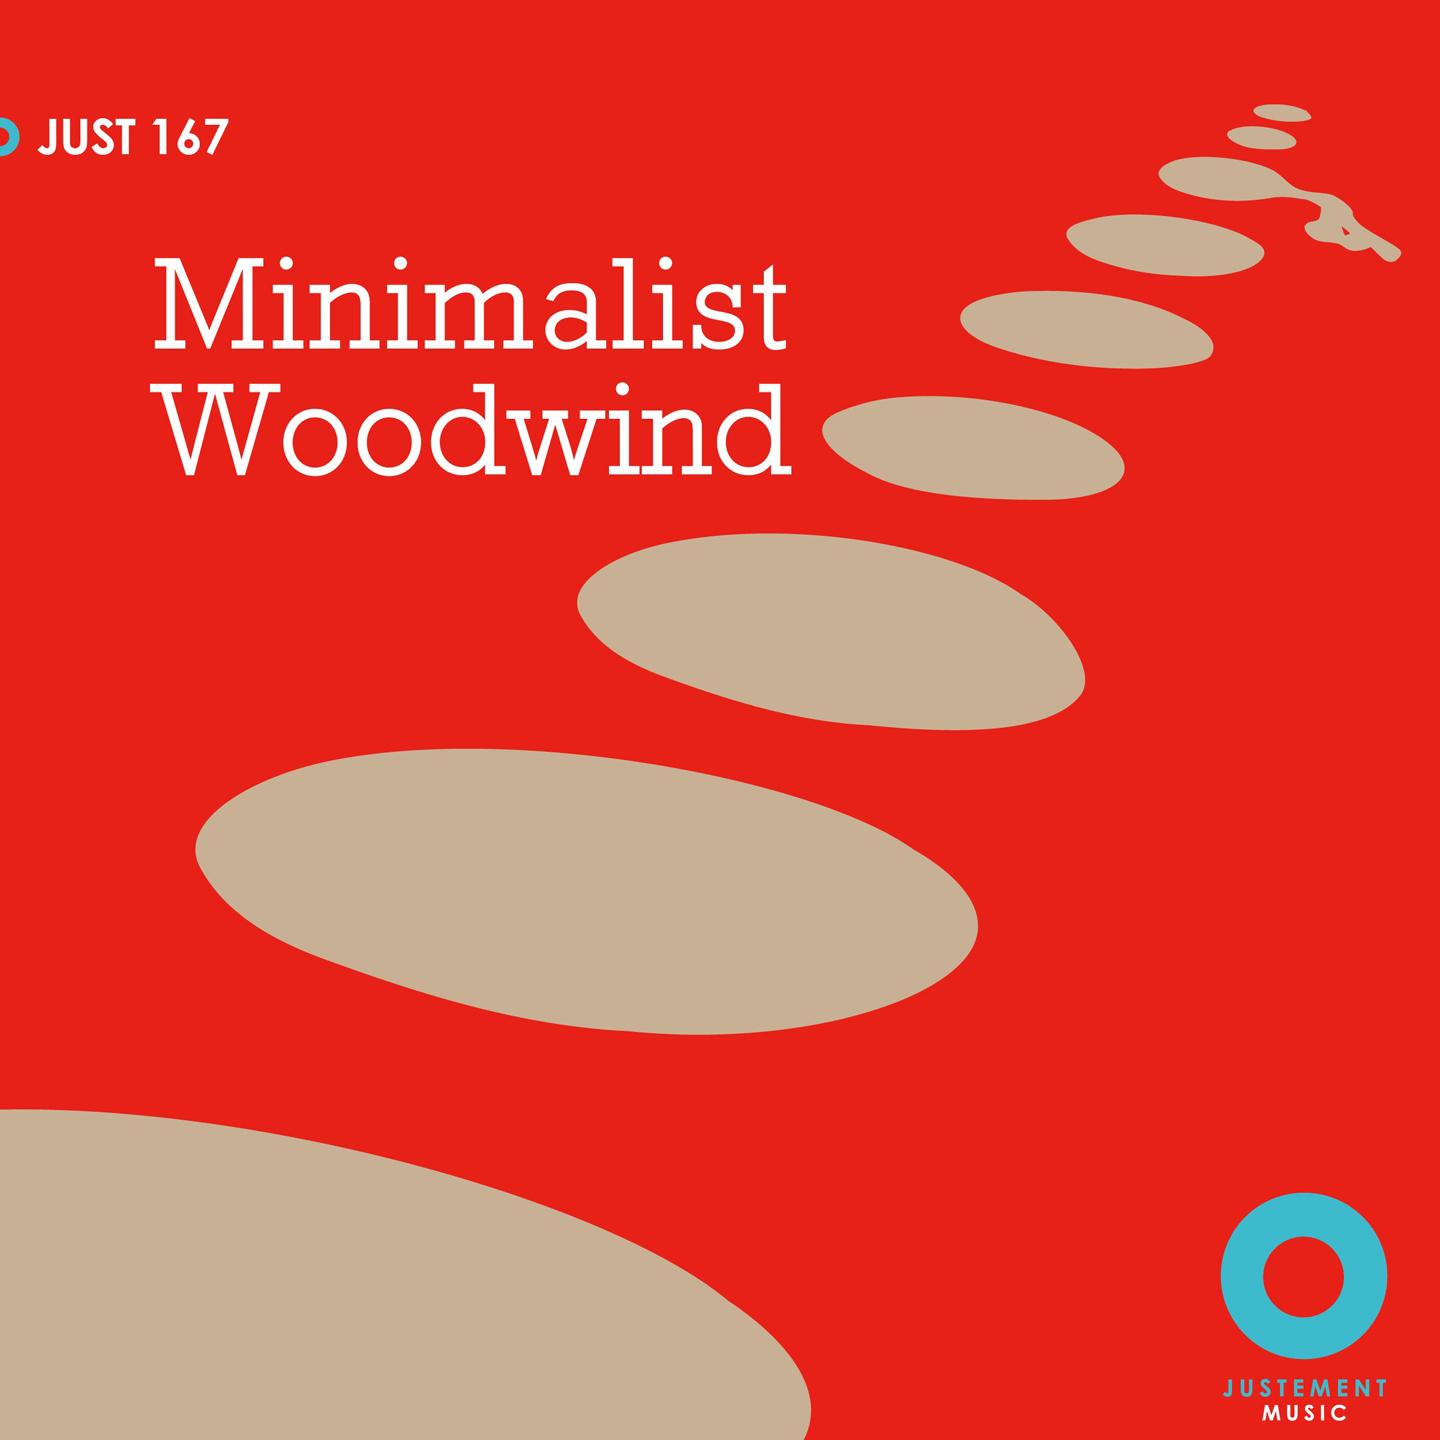 Minimalist Woodwind